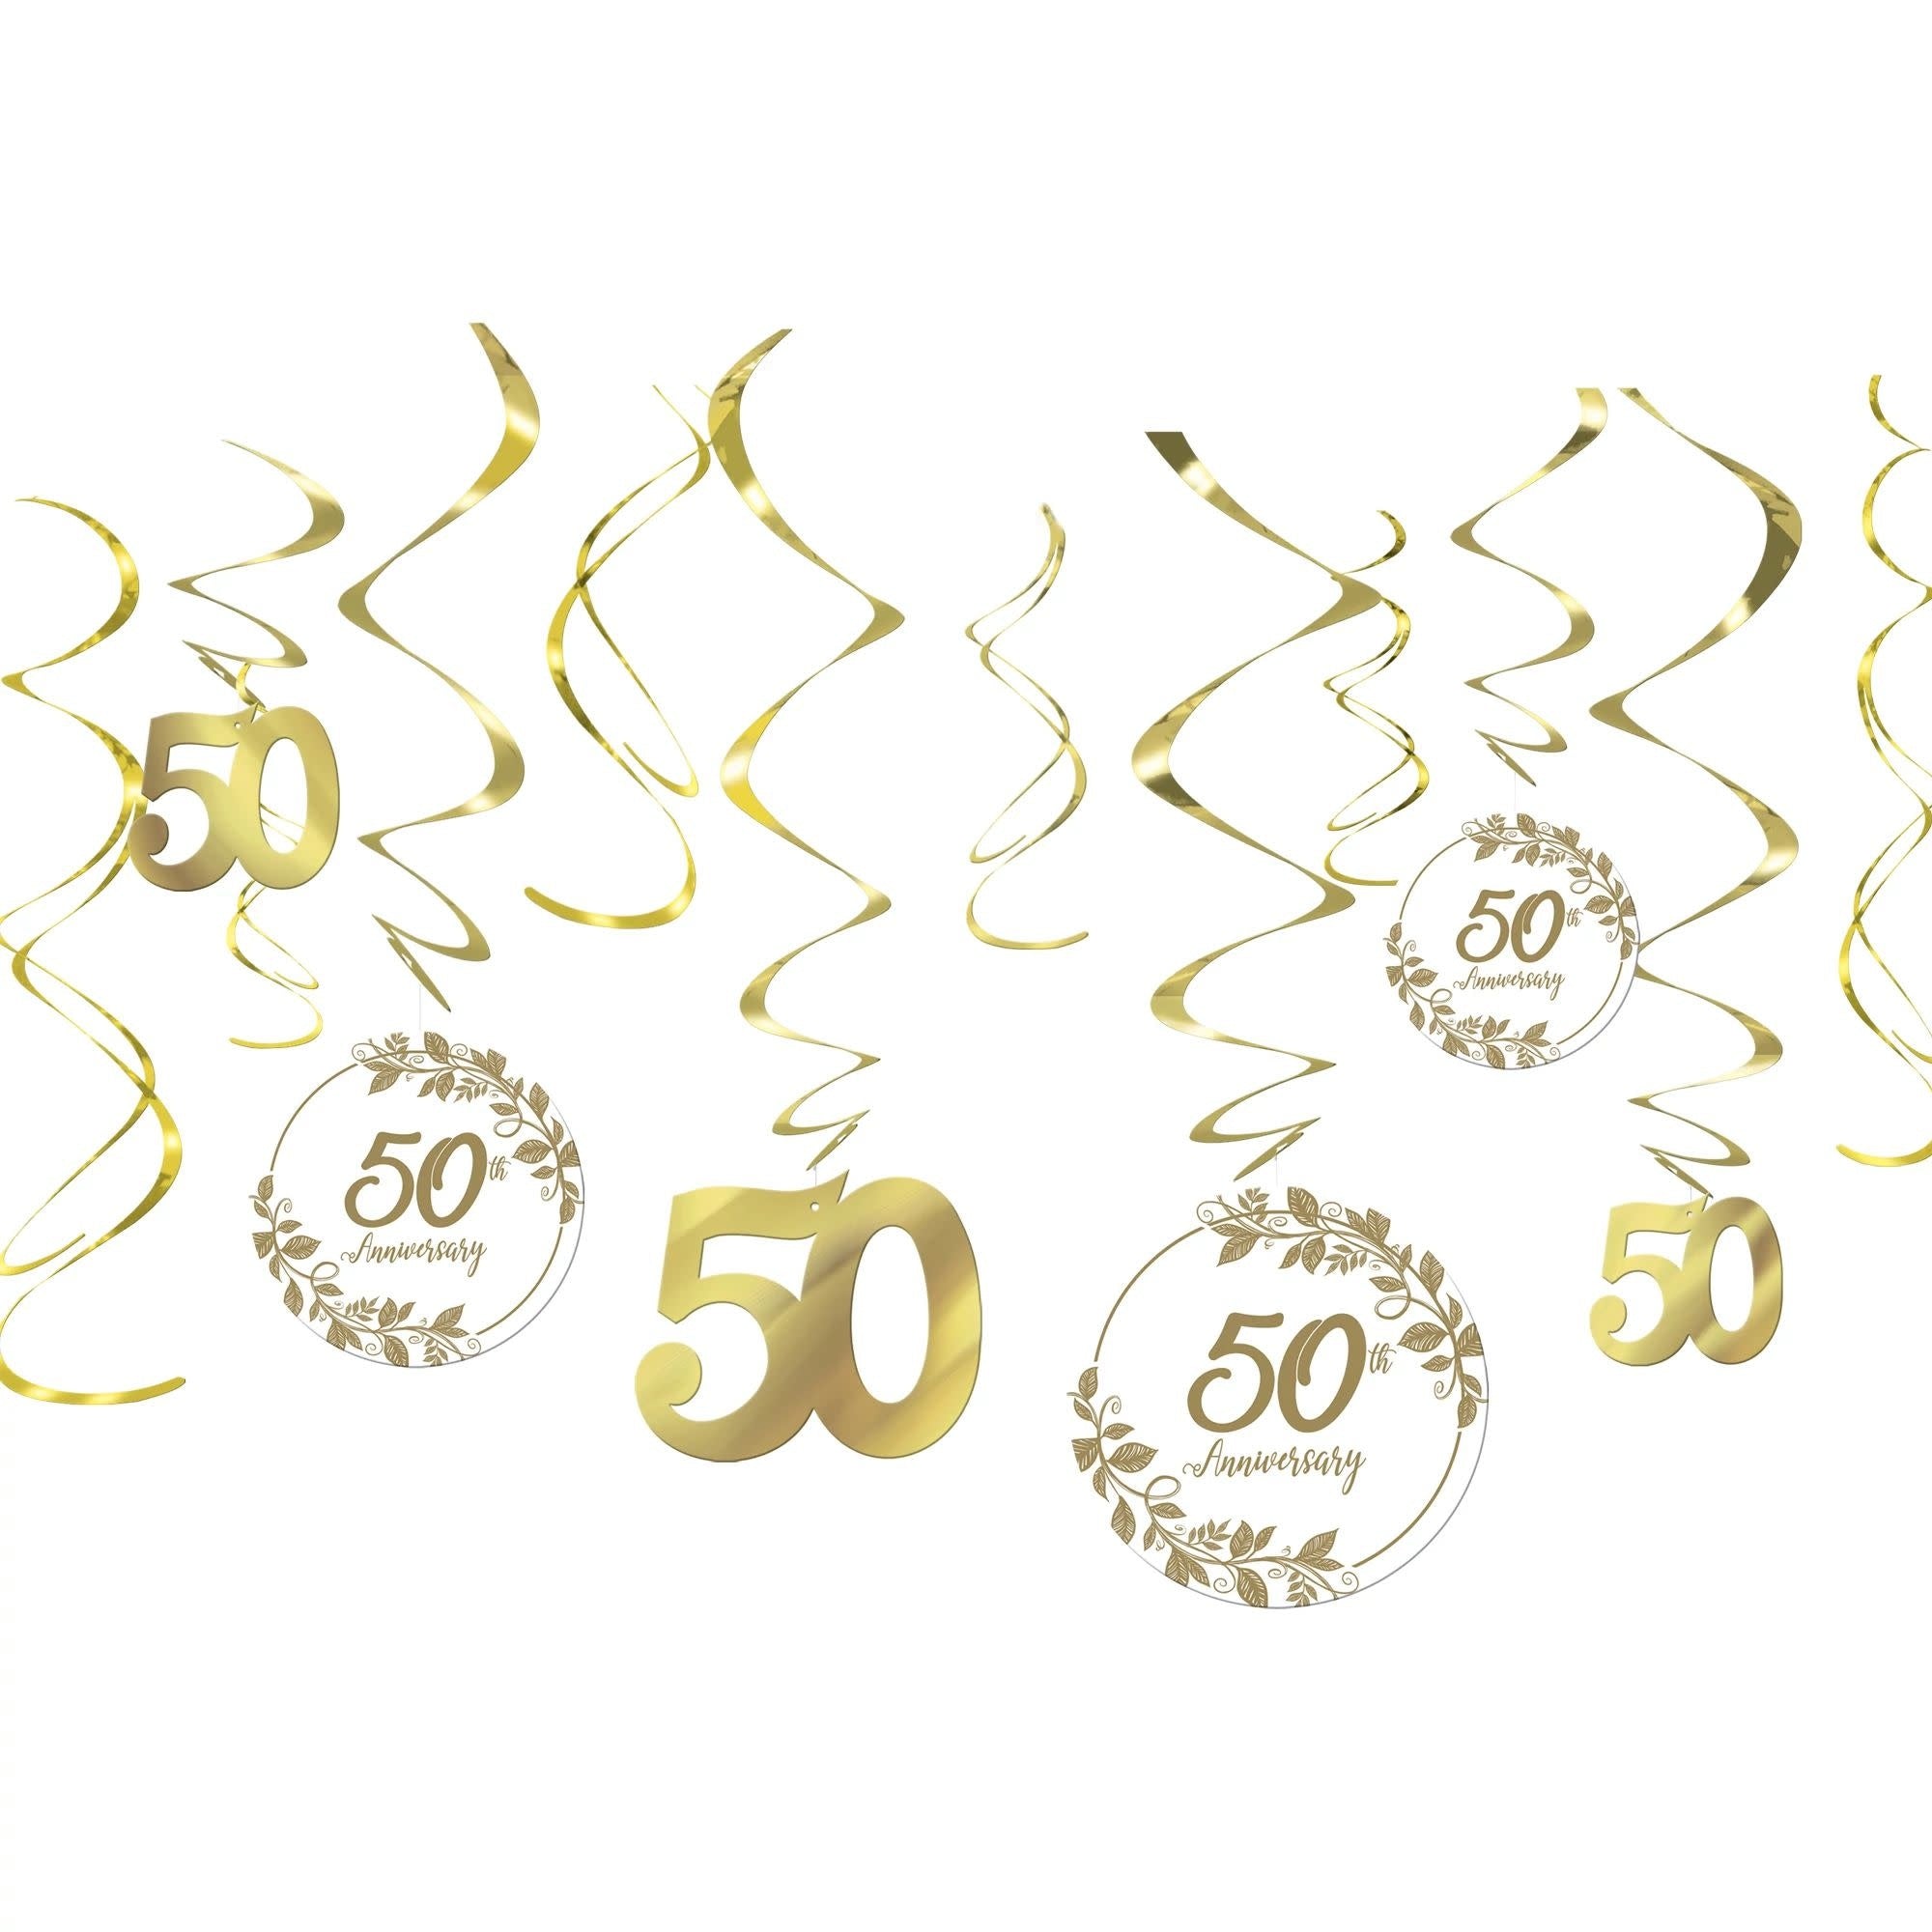 50th Anniversary Swirl Decoration Value Pack 12pcs